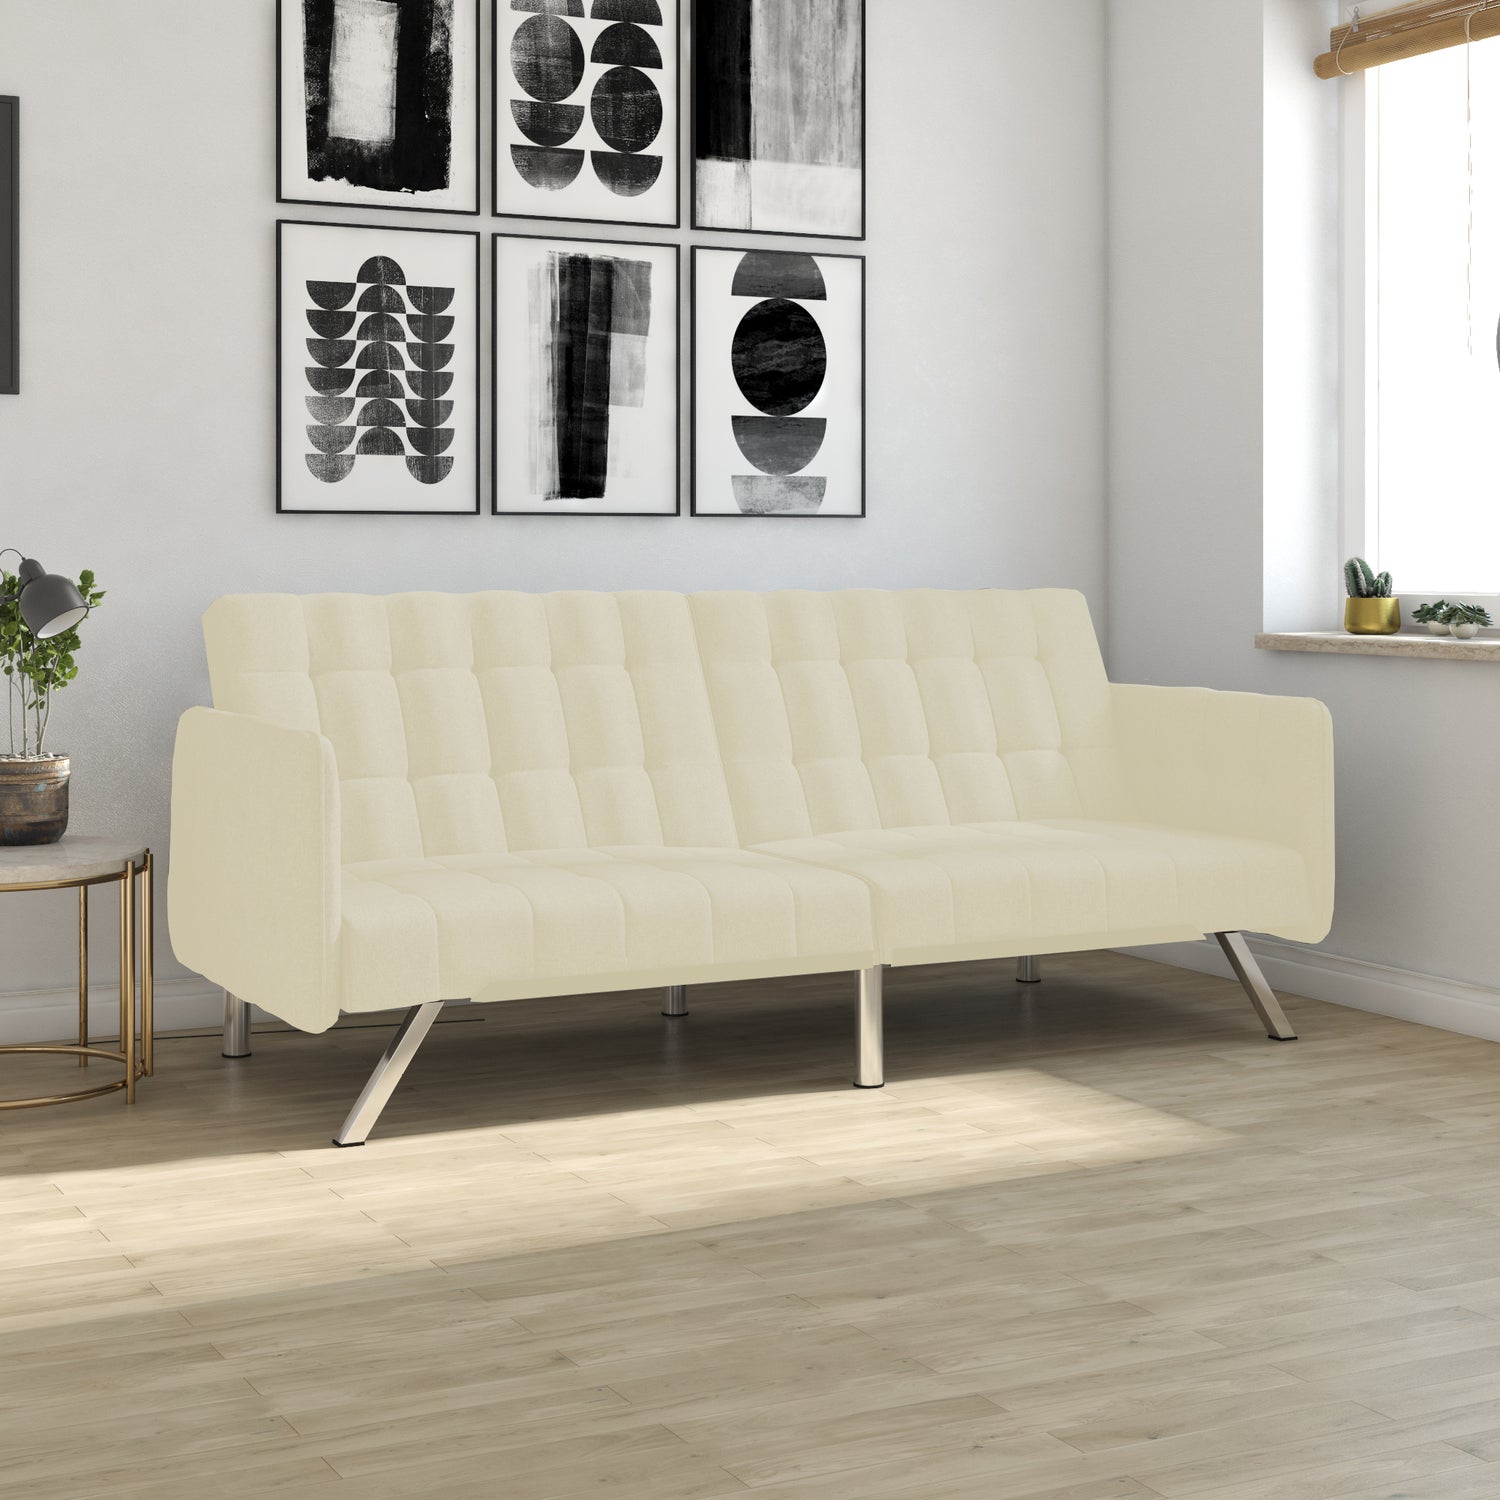 Dorel Home Emily Clic Clac Convertible Sofa Bed Vanilla-Better Bed Company 